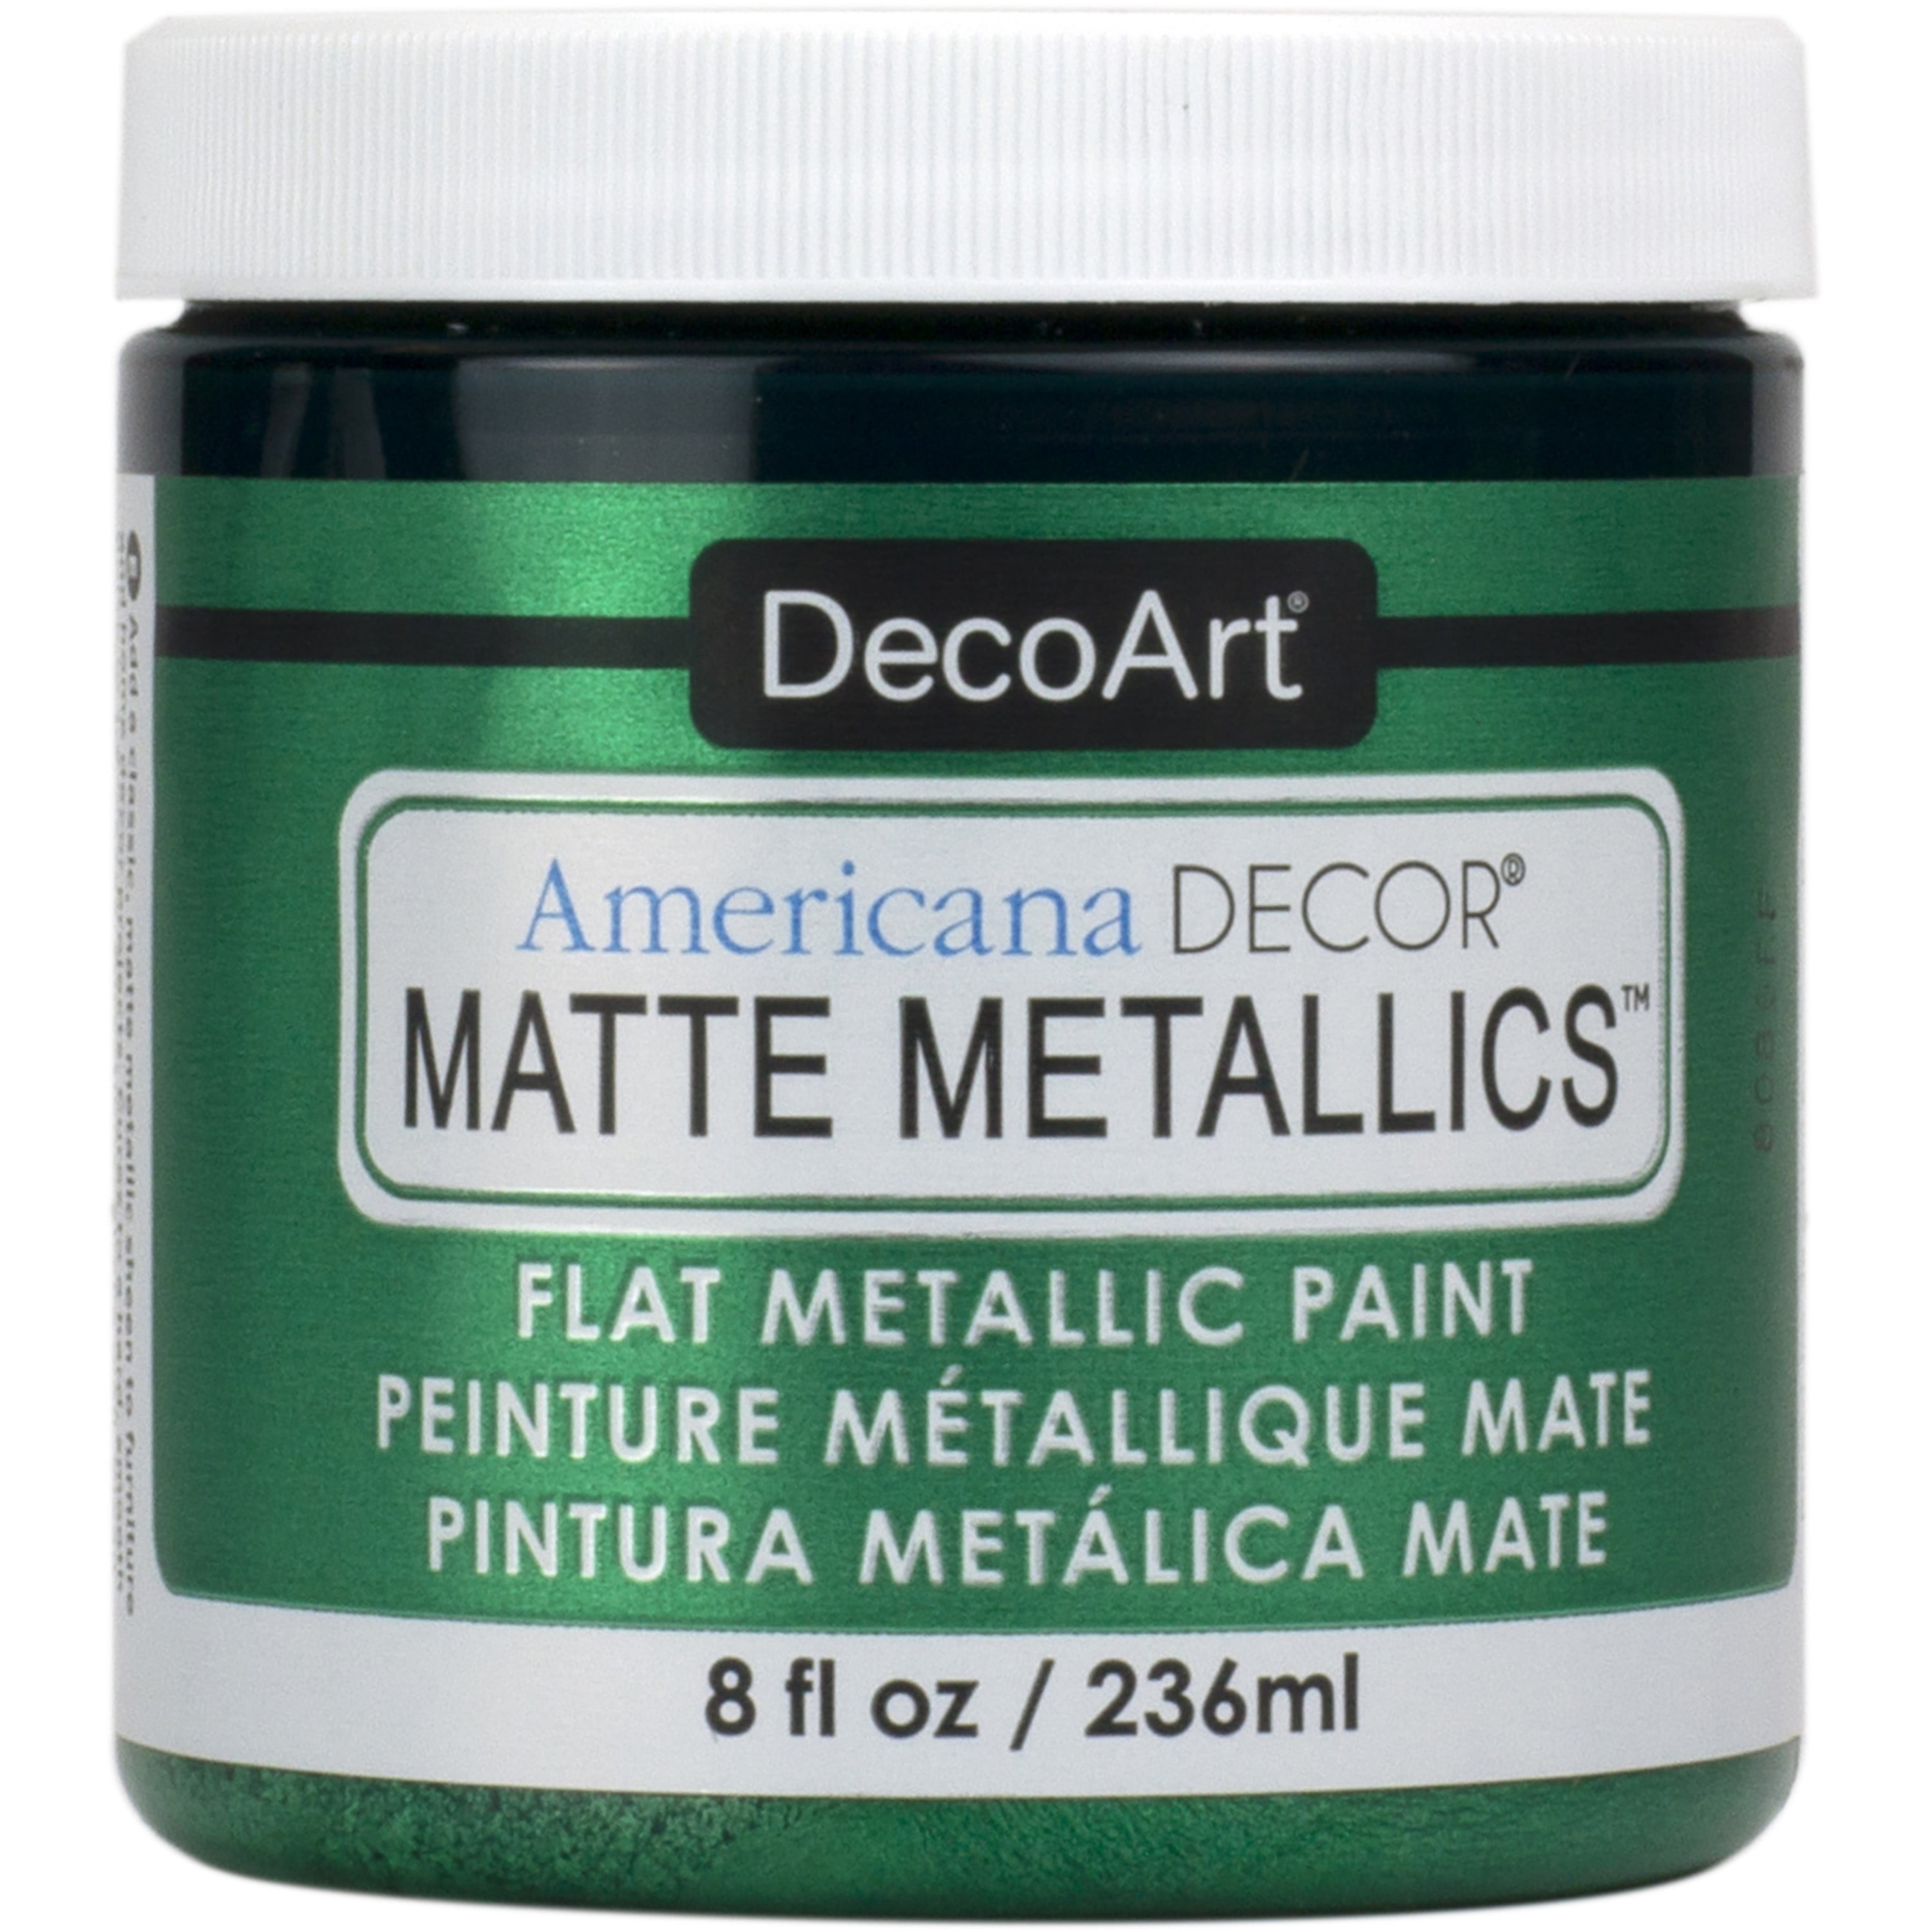 Decoart Americana Decor Matte Metallic Paint Emerald Green Walmart